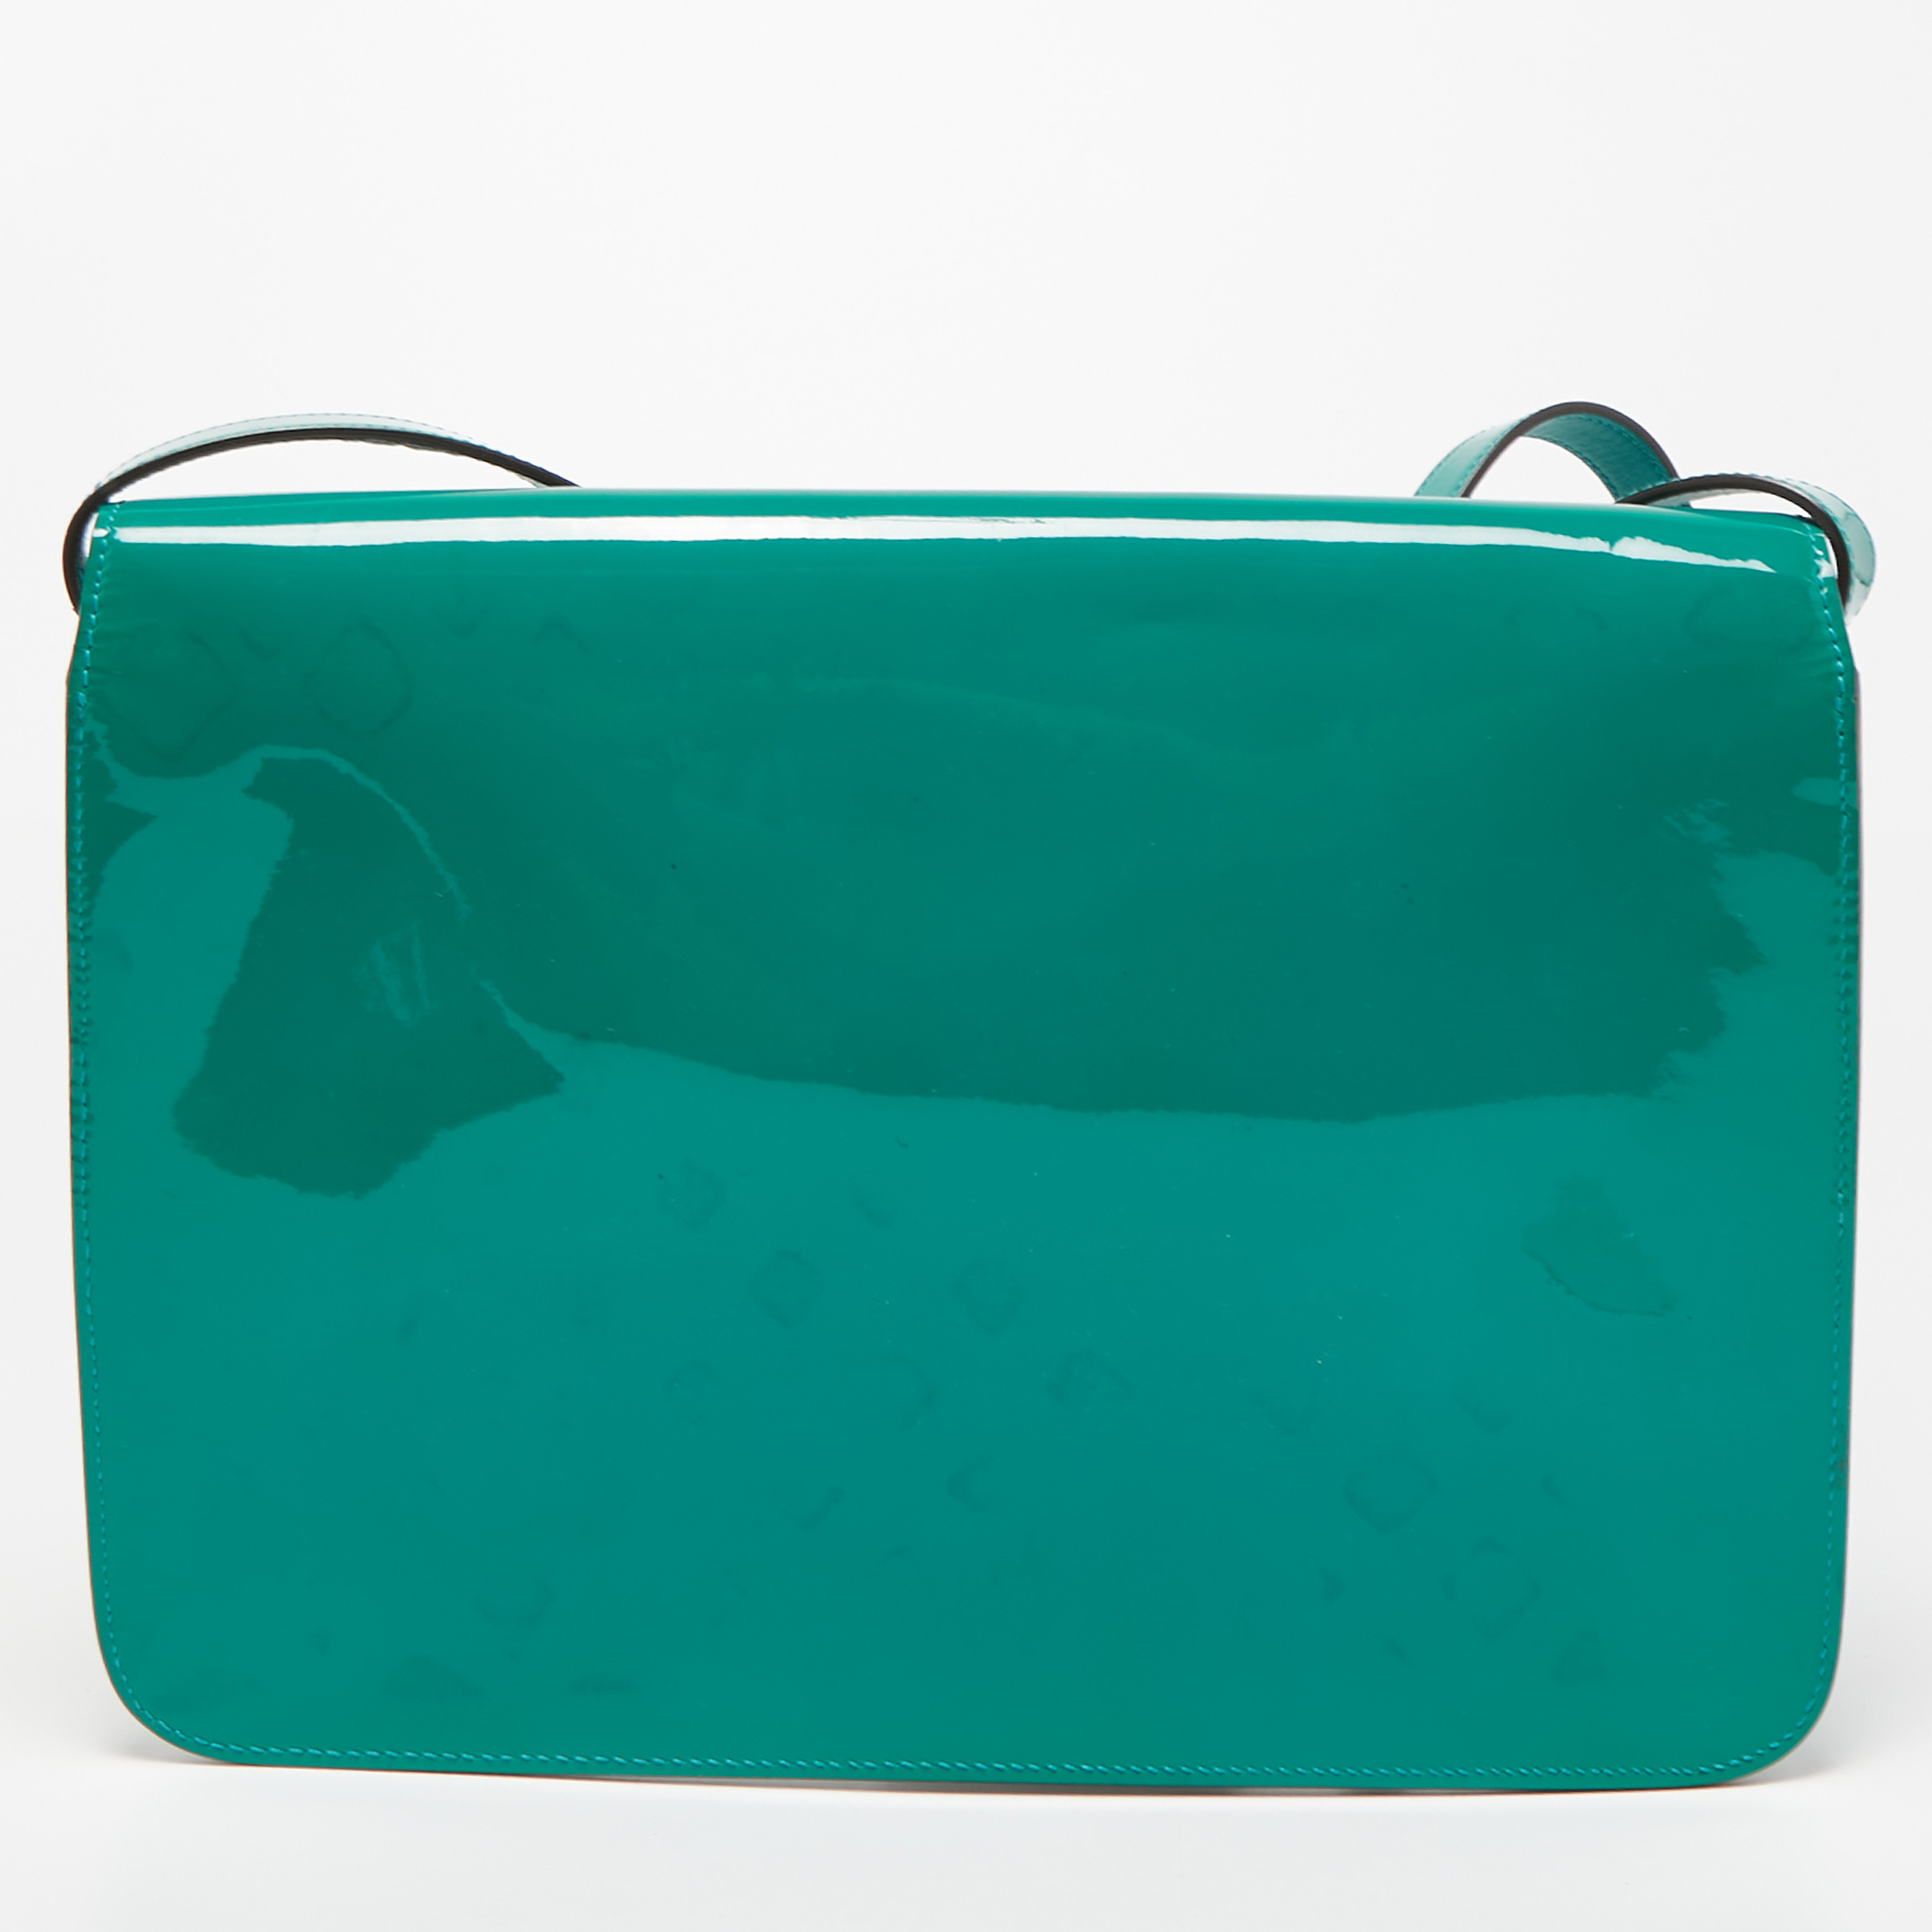 Gucci Green Patent Leather Bright Bit Crossbody Bag